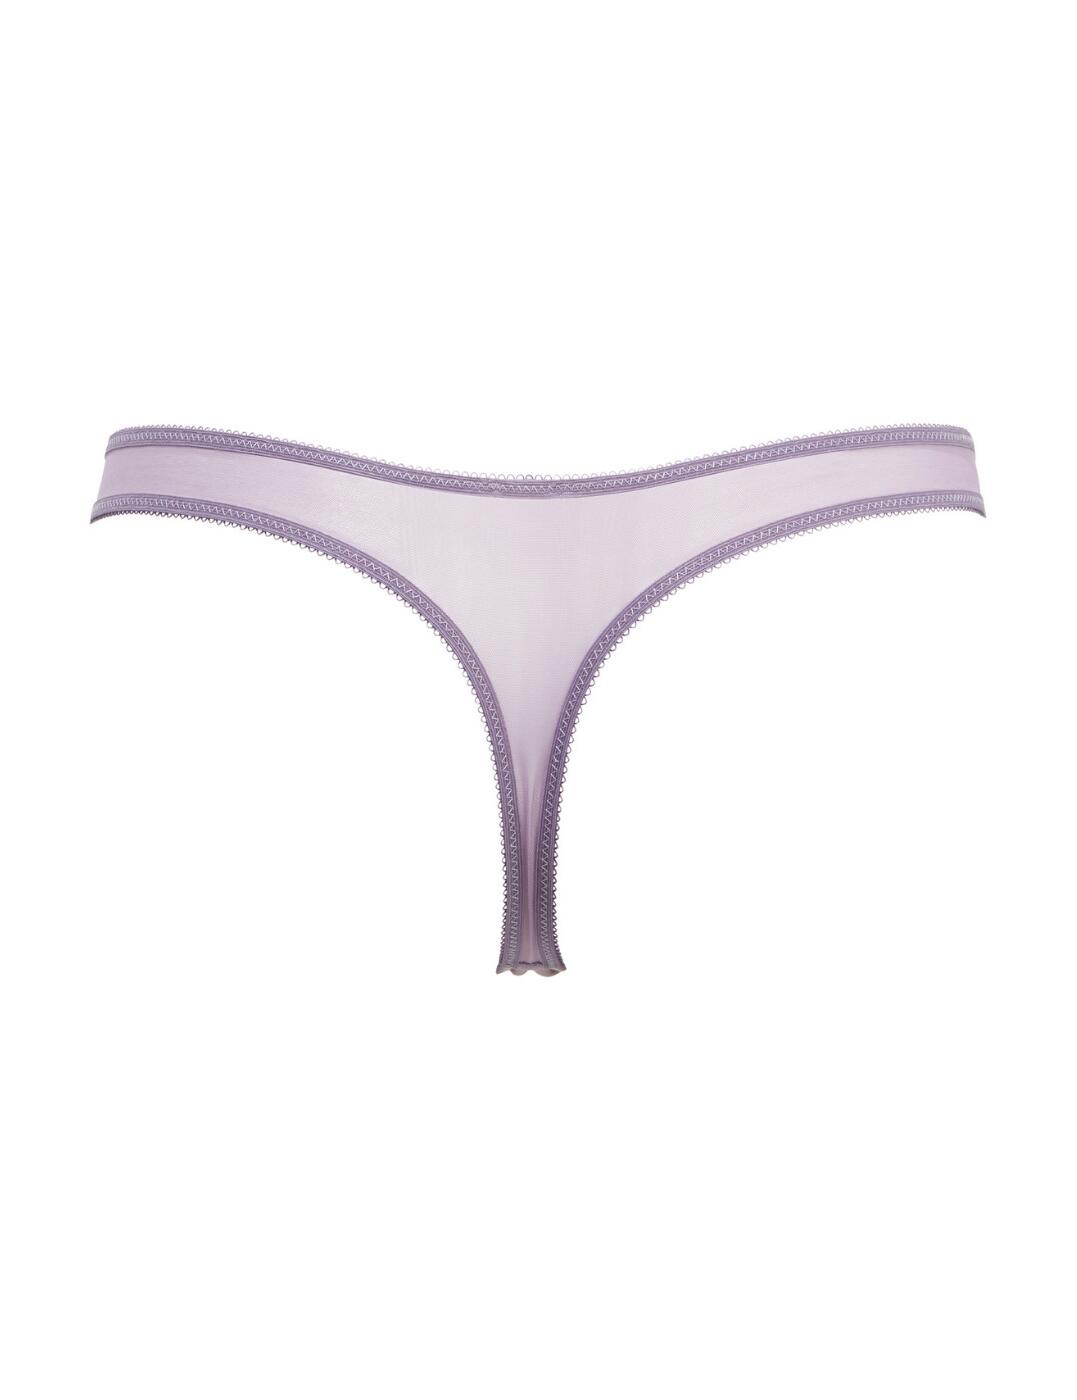 Gossard Glossies Lace Thong 13006 Sheer Thongs Womens Lingerie | eBay